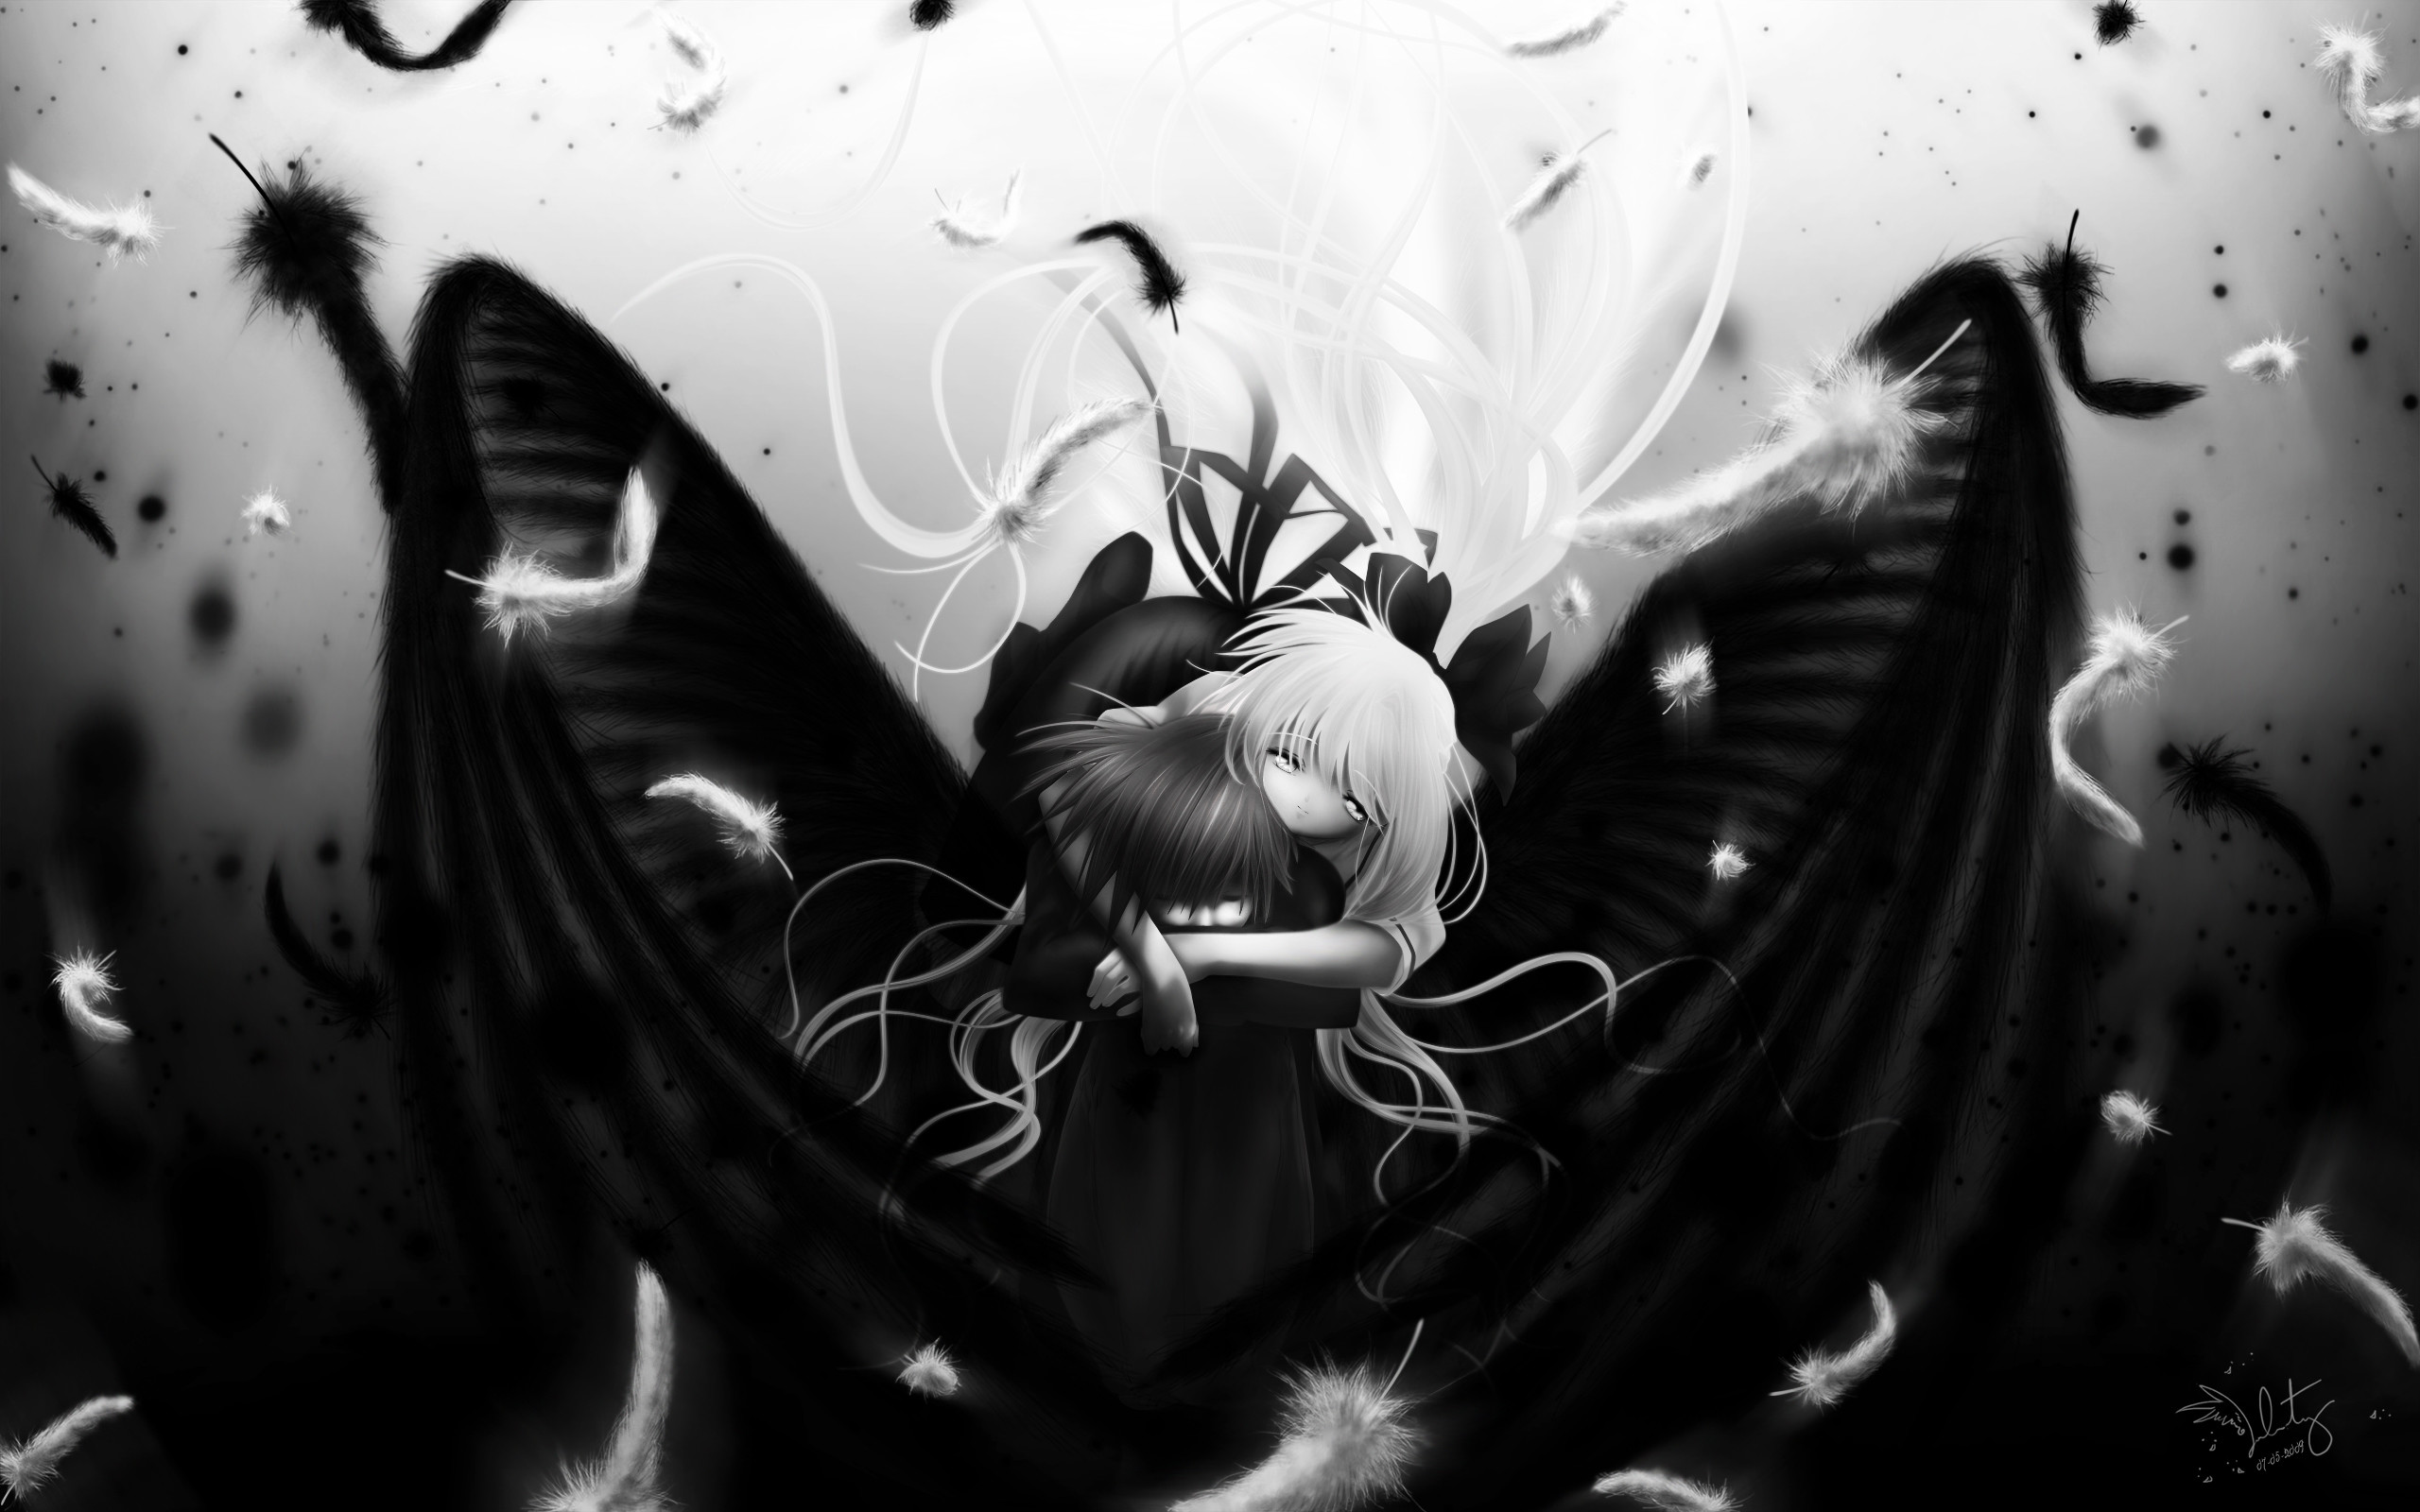 triste fondo de pantalla de anime,en blanco y negro,monocromo,cg artwork,fotografía monocroma,ala